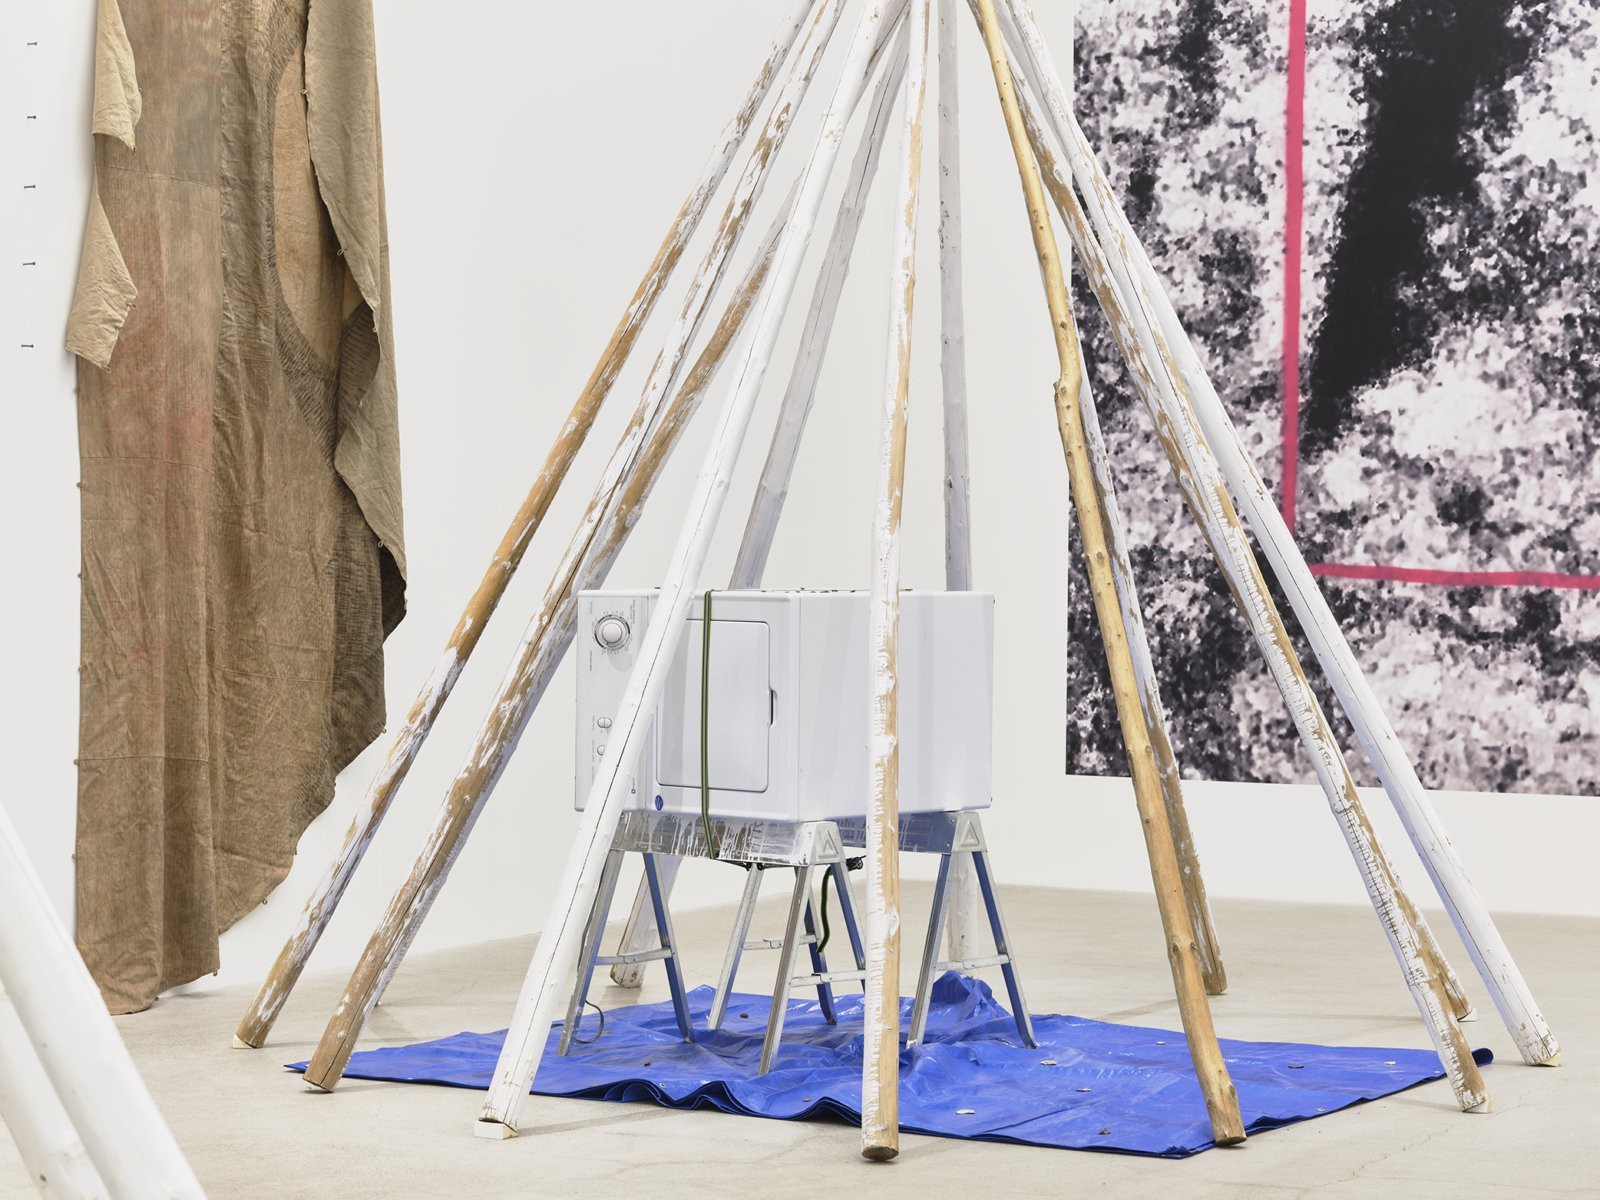 Duane Linklater, anteclovis (detail), 2020, tipi poles, paint, nylon rope, tarpaulin, steel sawhorses, washing machine, tie-down strap, arrowheads, 230 x 158 x 158 in. (584 x 401 x 401 cm)